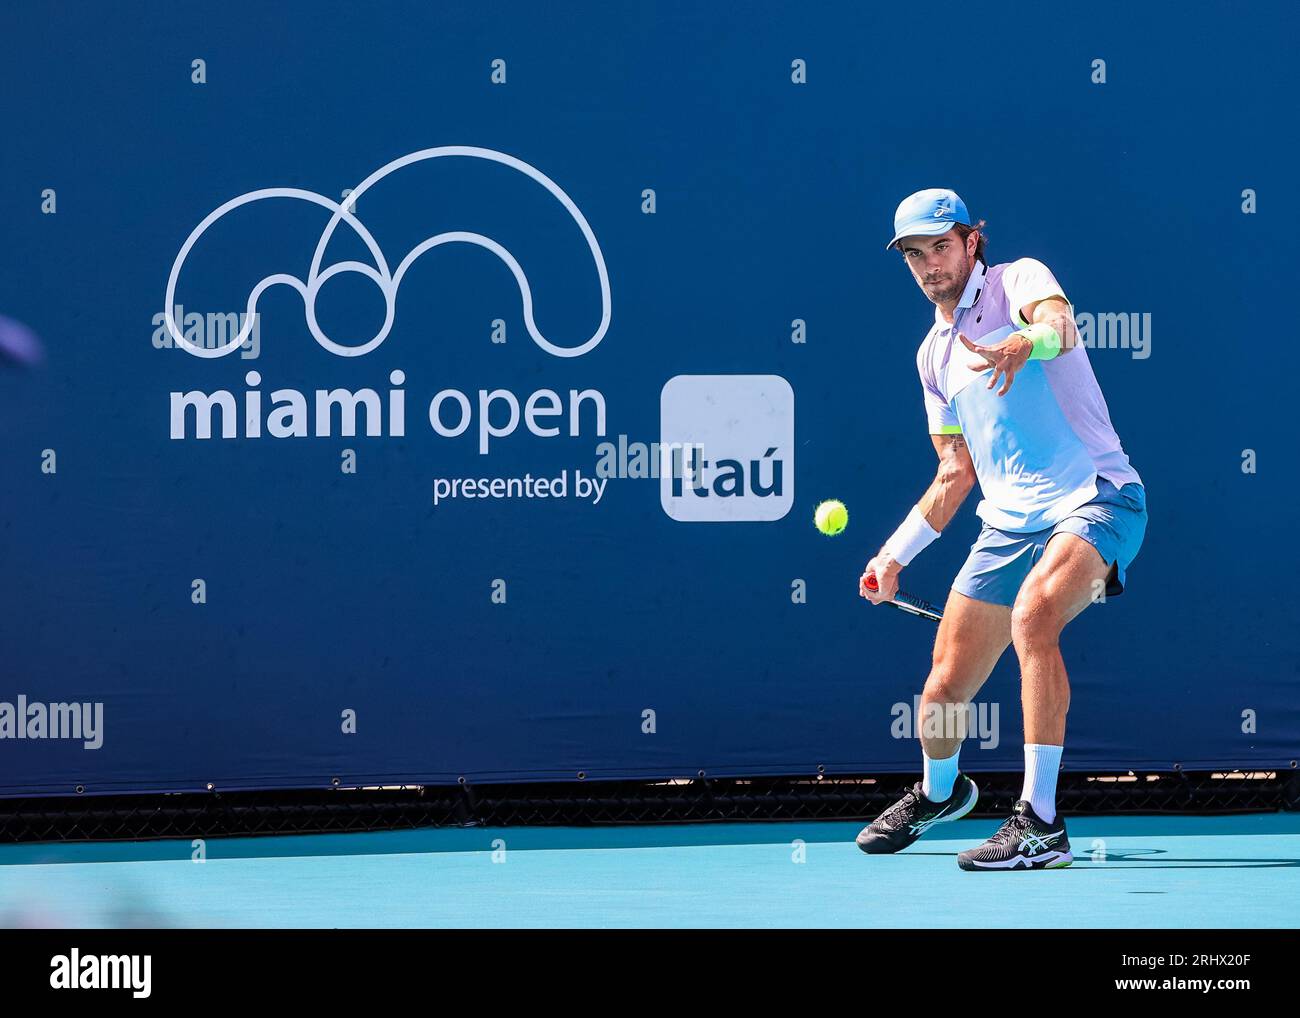 Florida, USA, Miami Open Tennis, March 2023, Hard Rock Stadium, Photo: Chris Arjoon/Credit Stock Photo